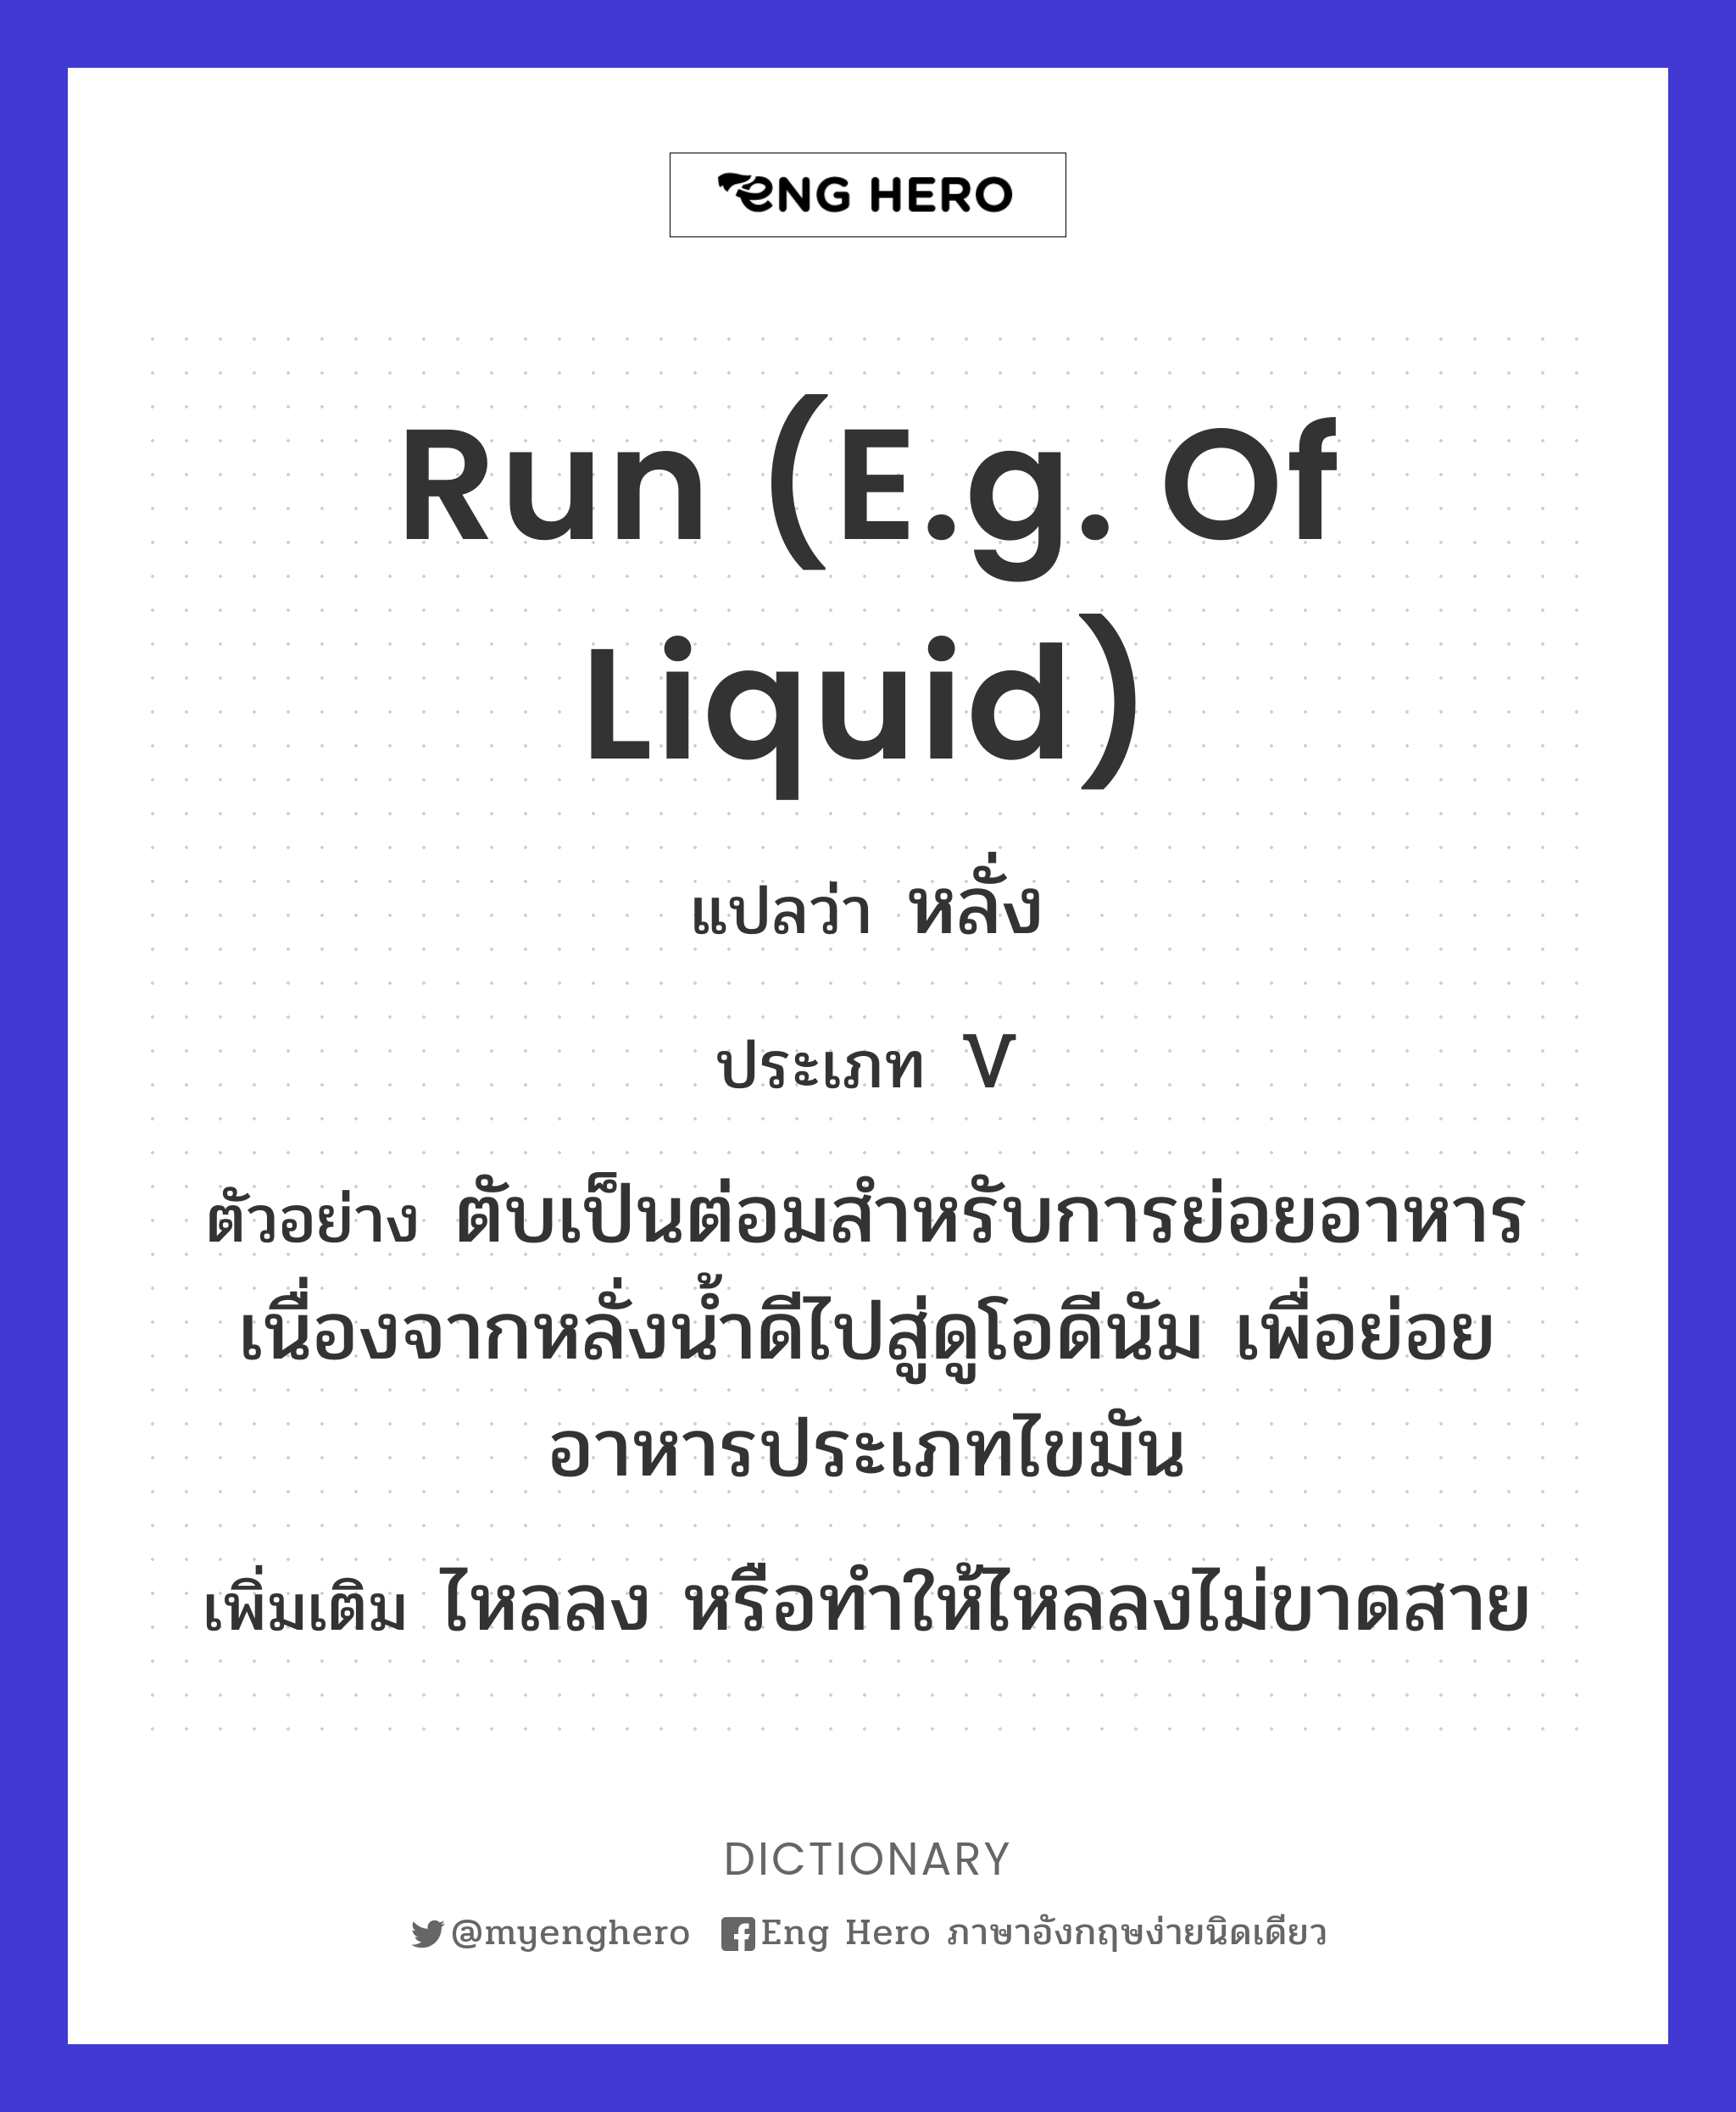 run (e.g. of liquid)